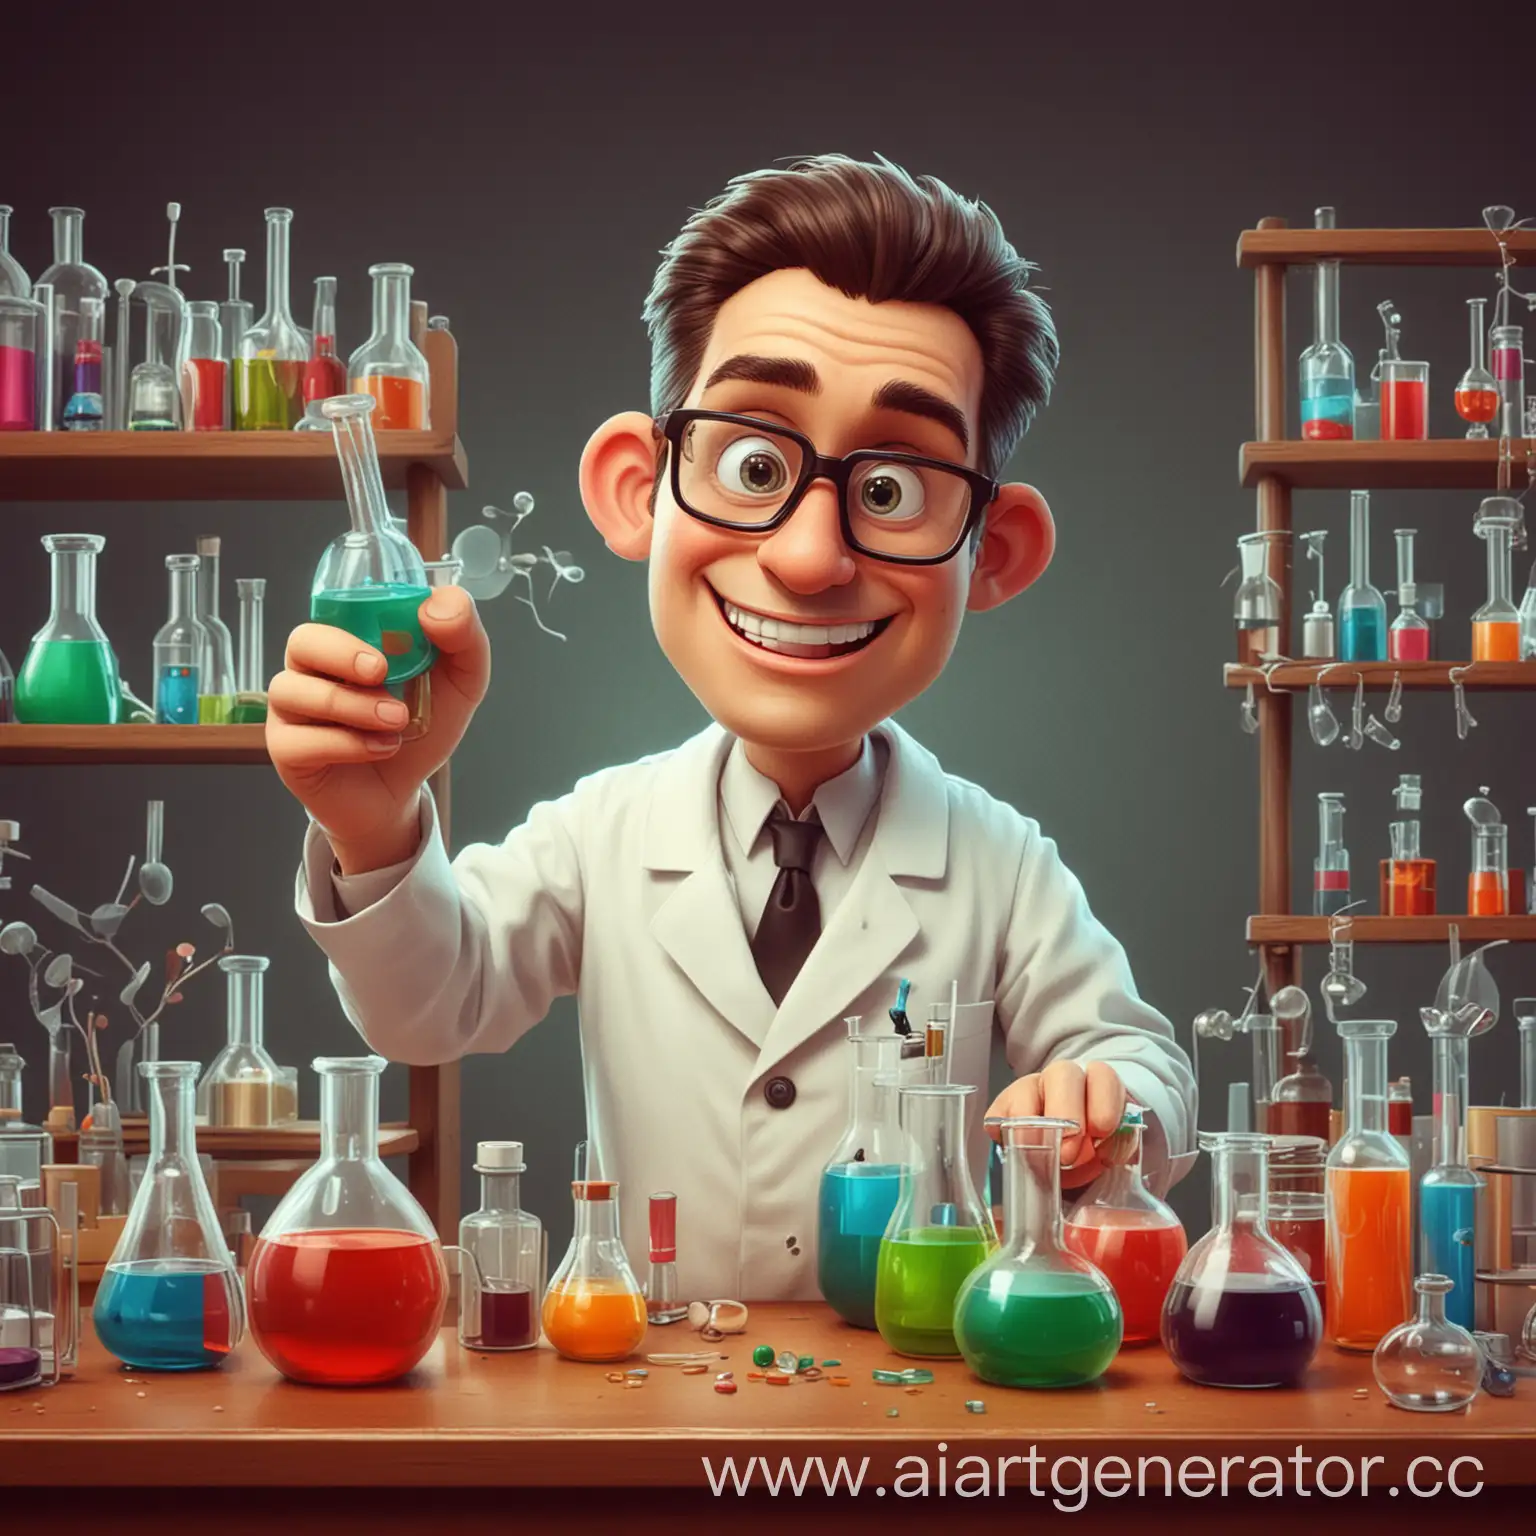 Cheerful-Cartoon-Chemist-Conducting-Experiments-in-Laboratory-Setting